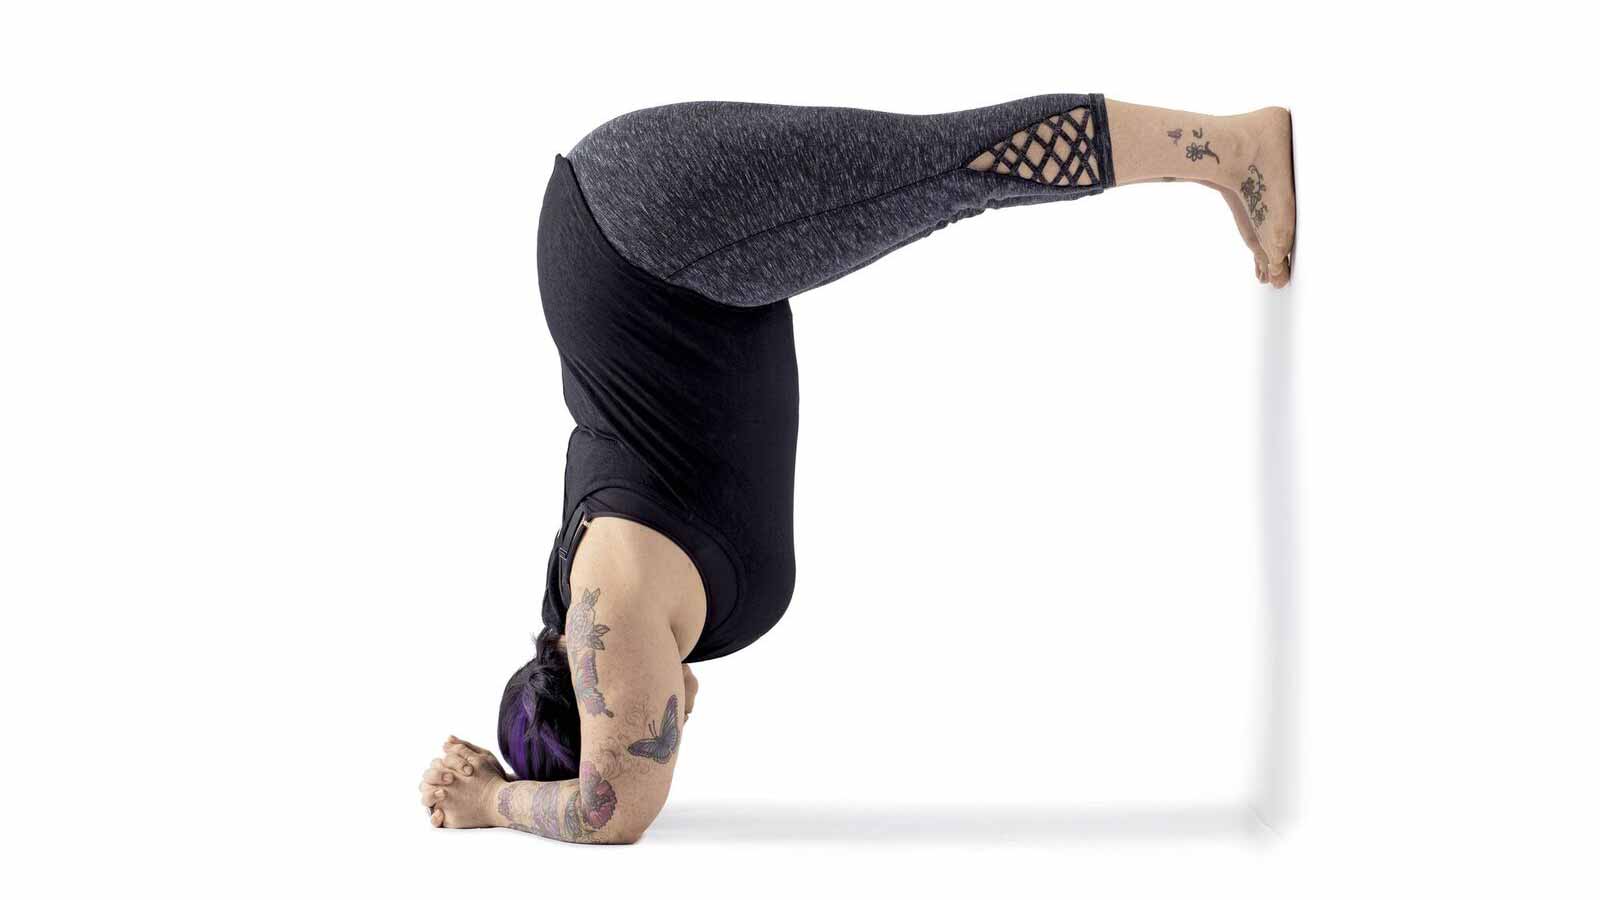 Yoga Asanas For Stress Relief - Janu Sirsasana - Head On the Knee Pose |  KIRAN ATMA